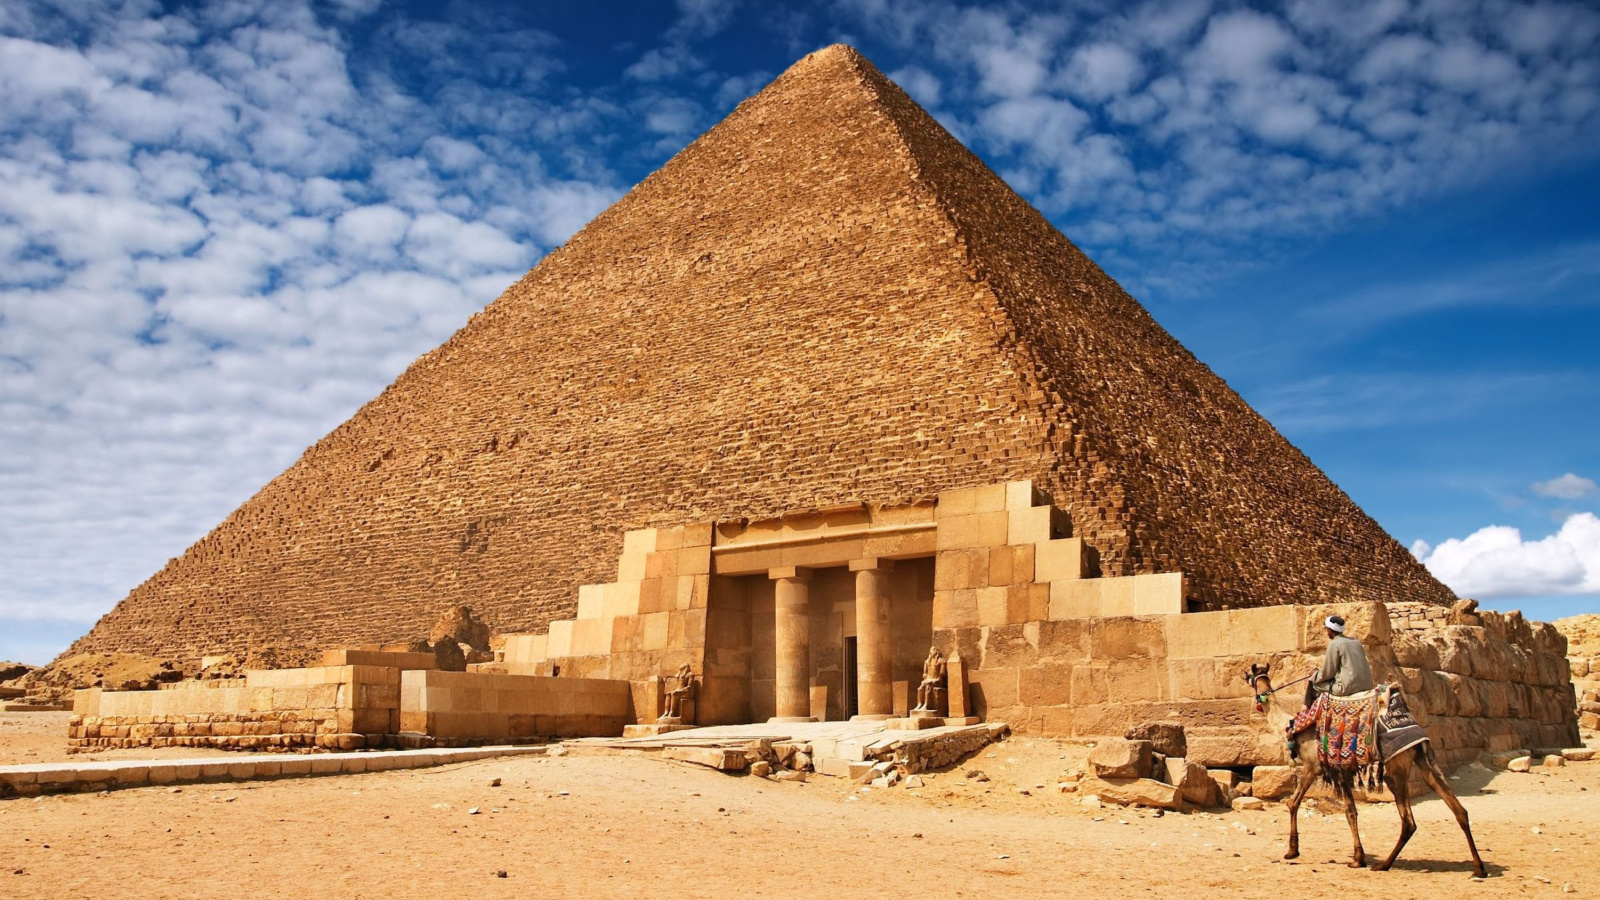 Das Great Pyramid of Giza in Egypt Wallpaper 1600x900